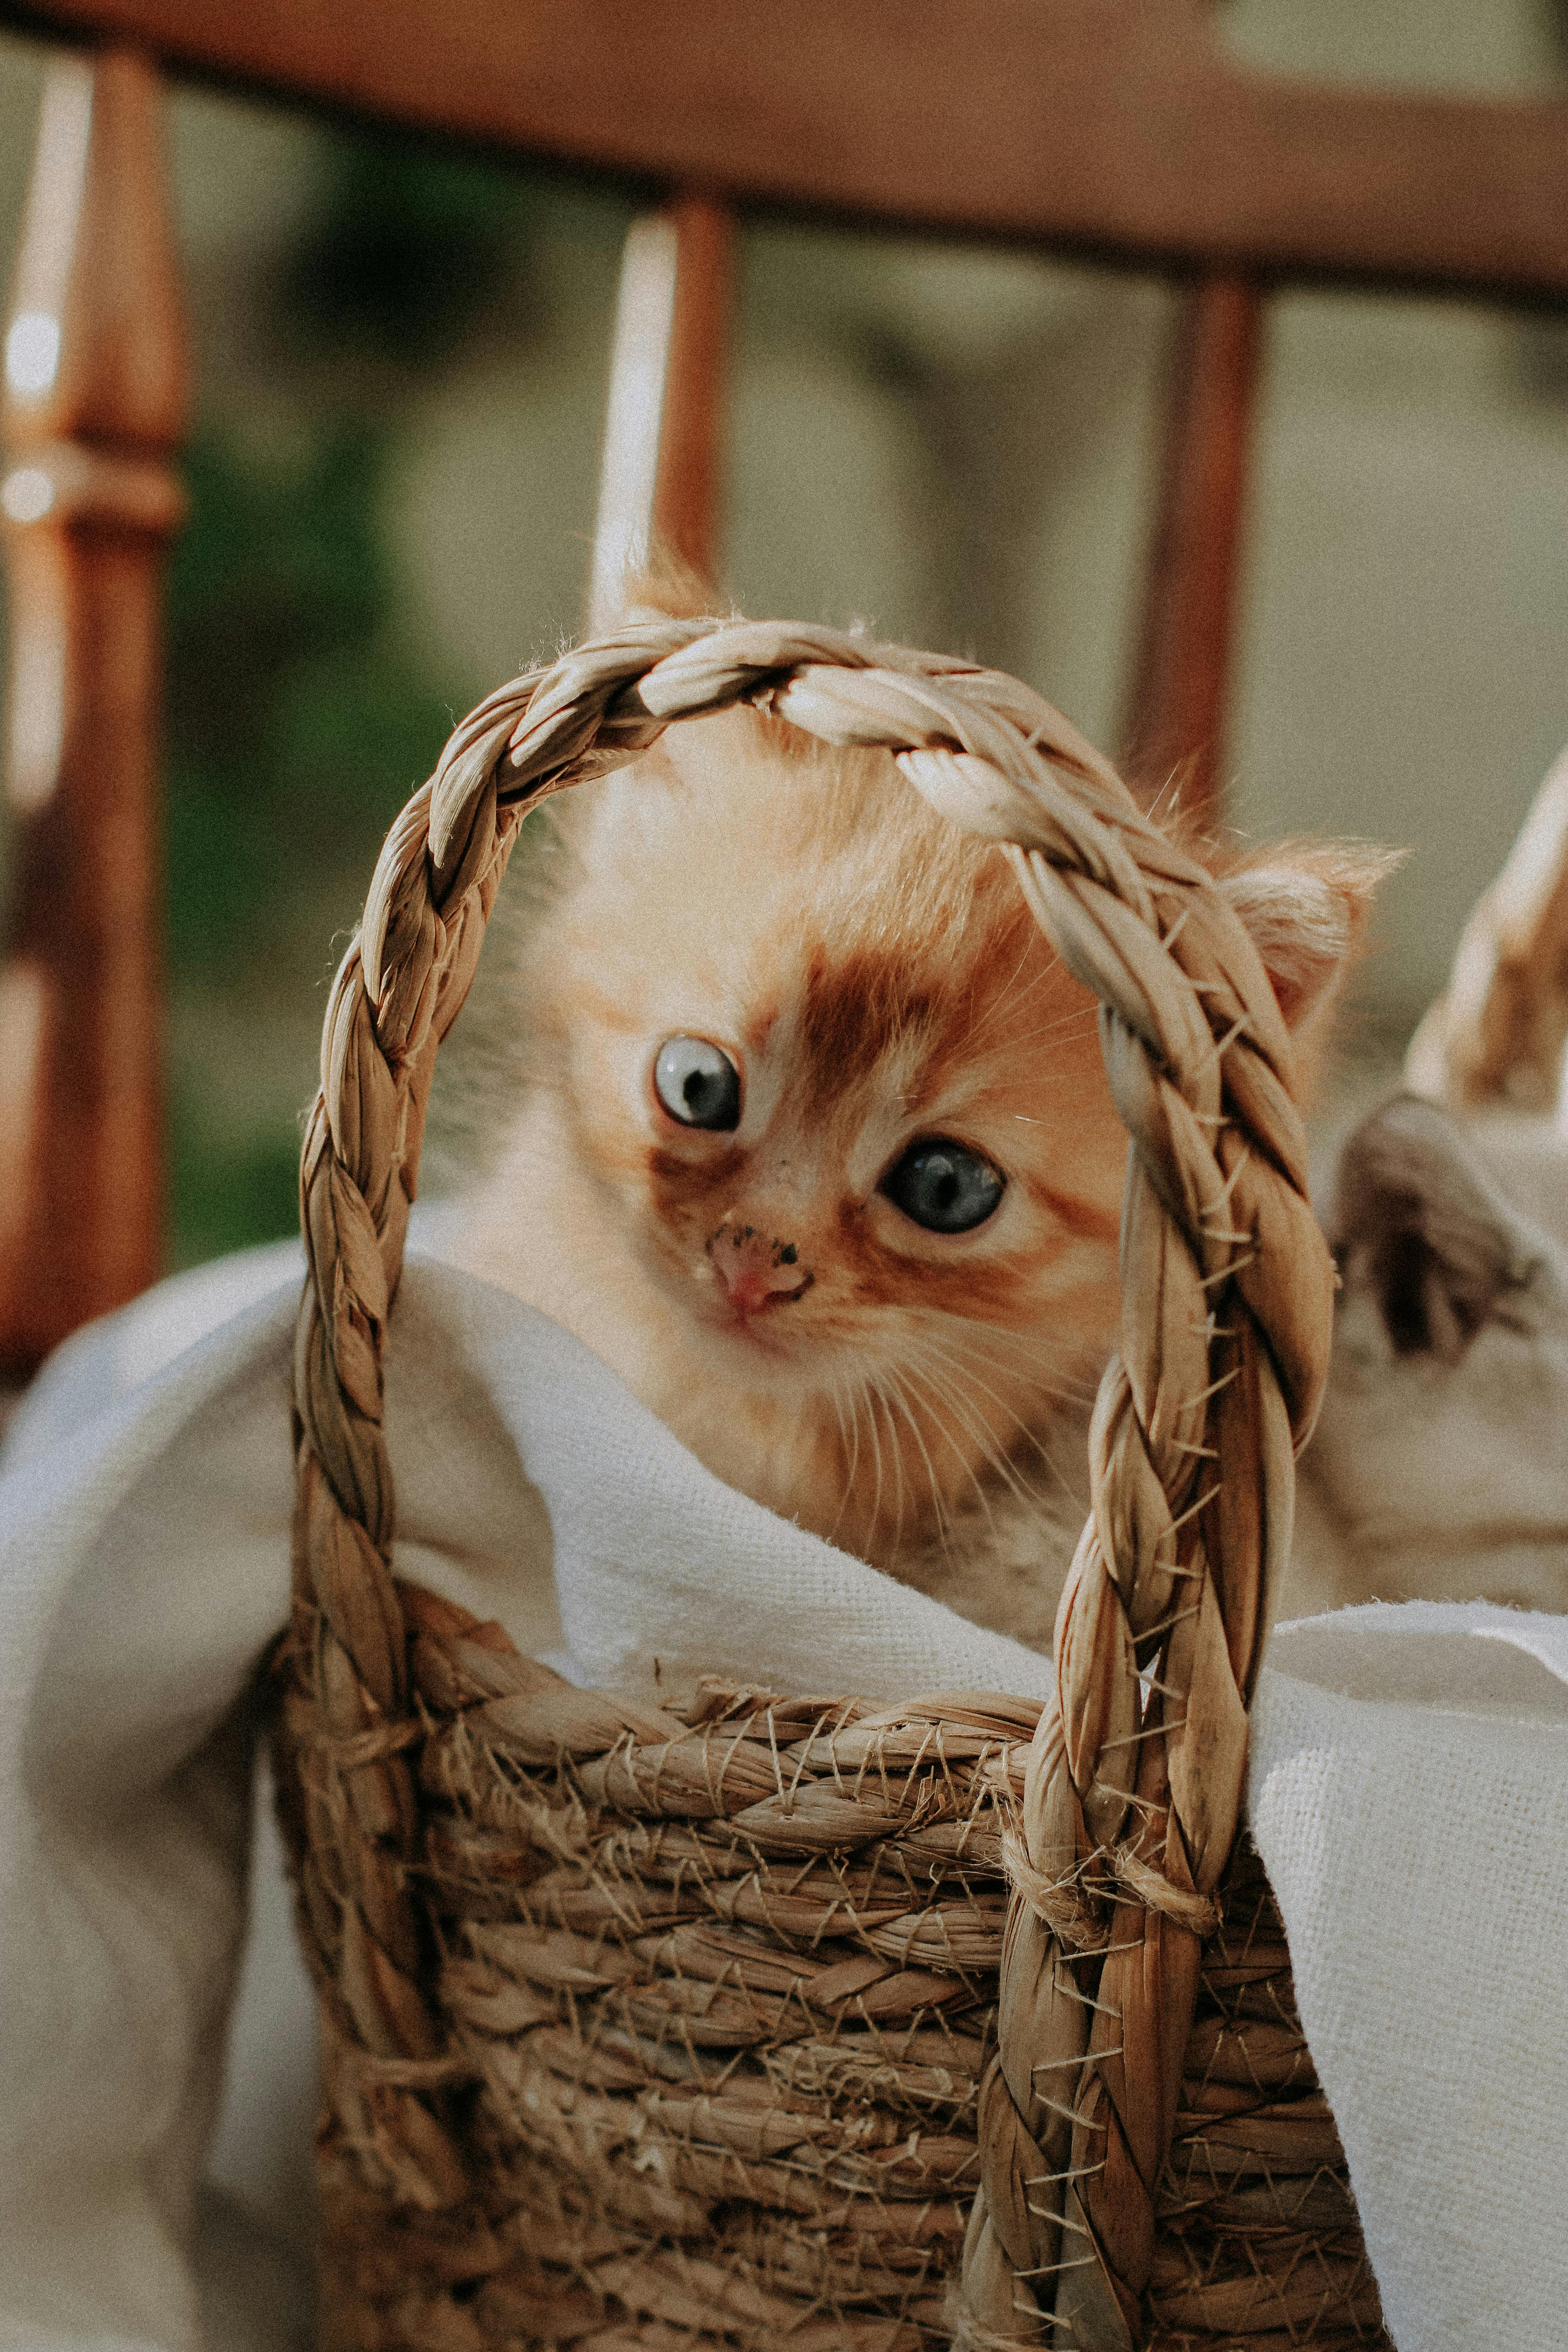 cutest orange kitten ever